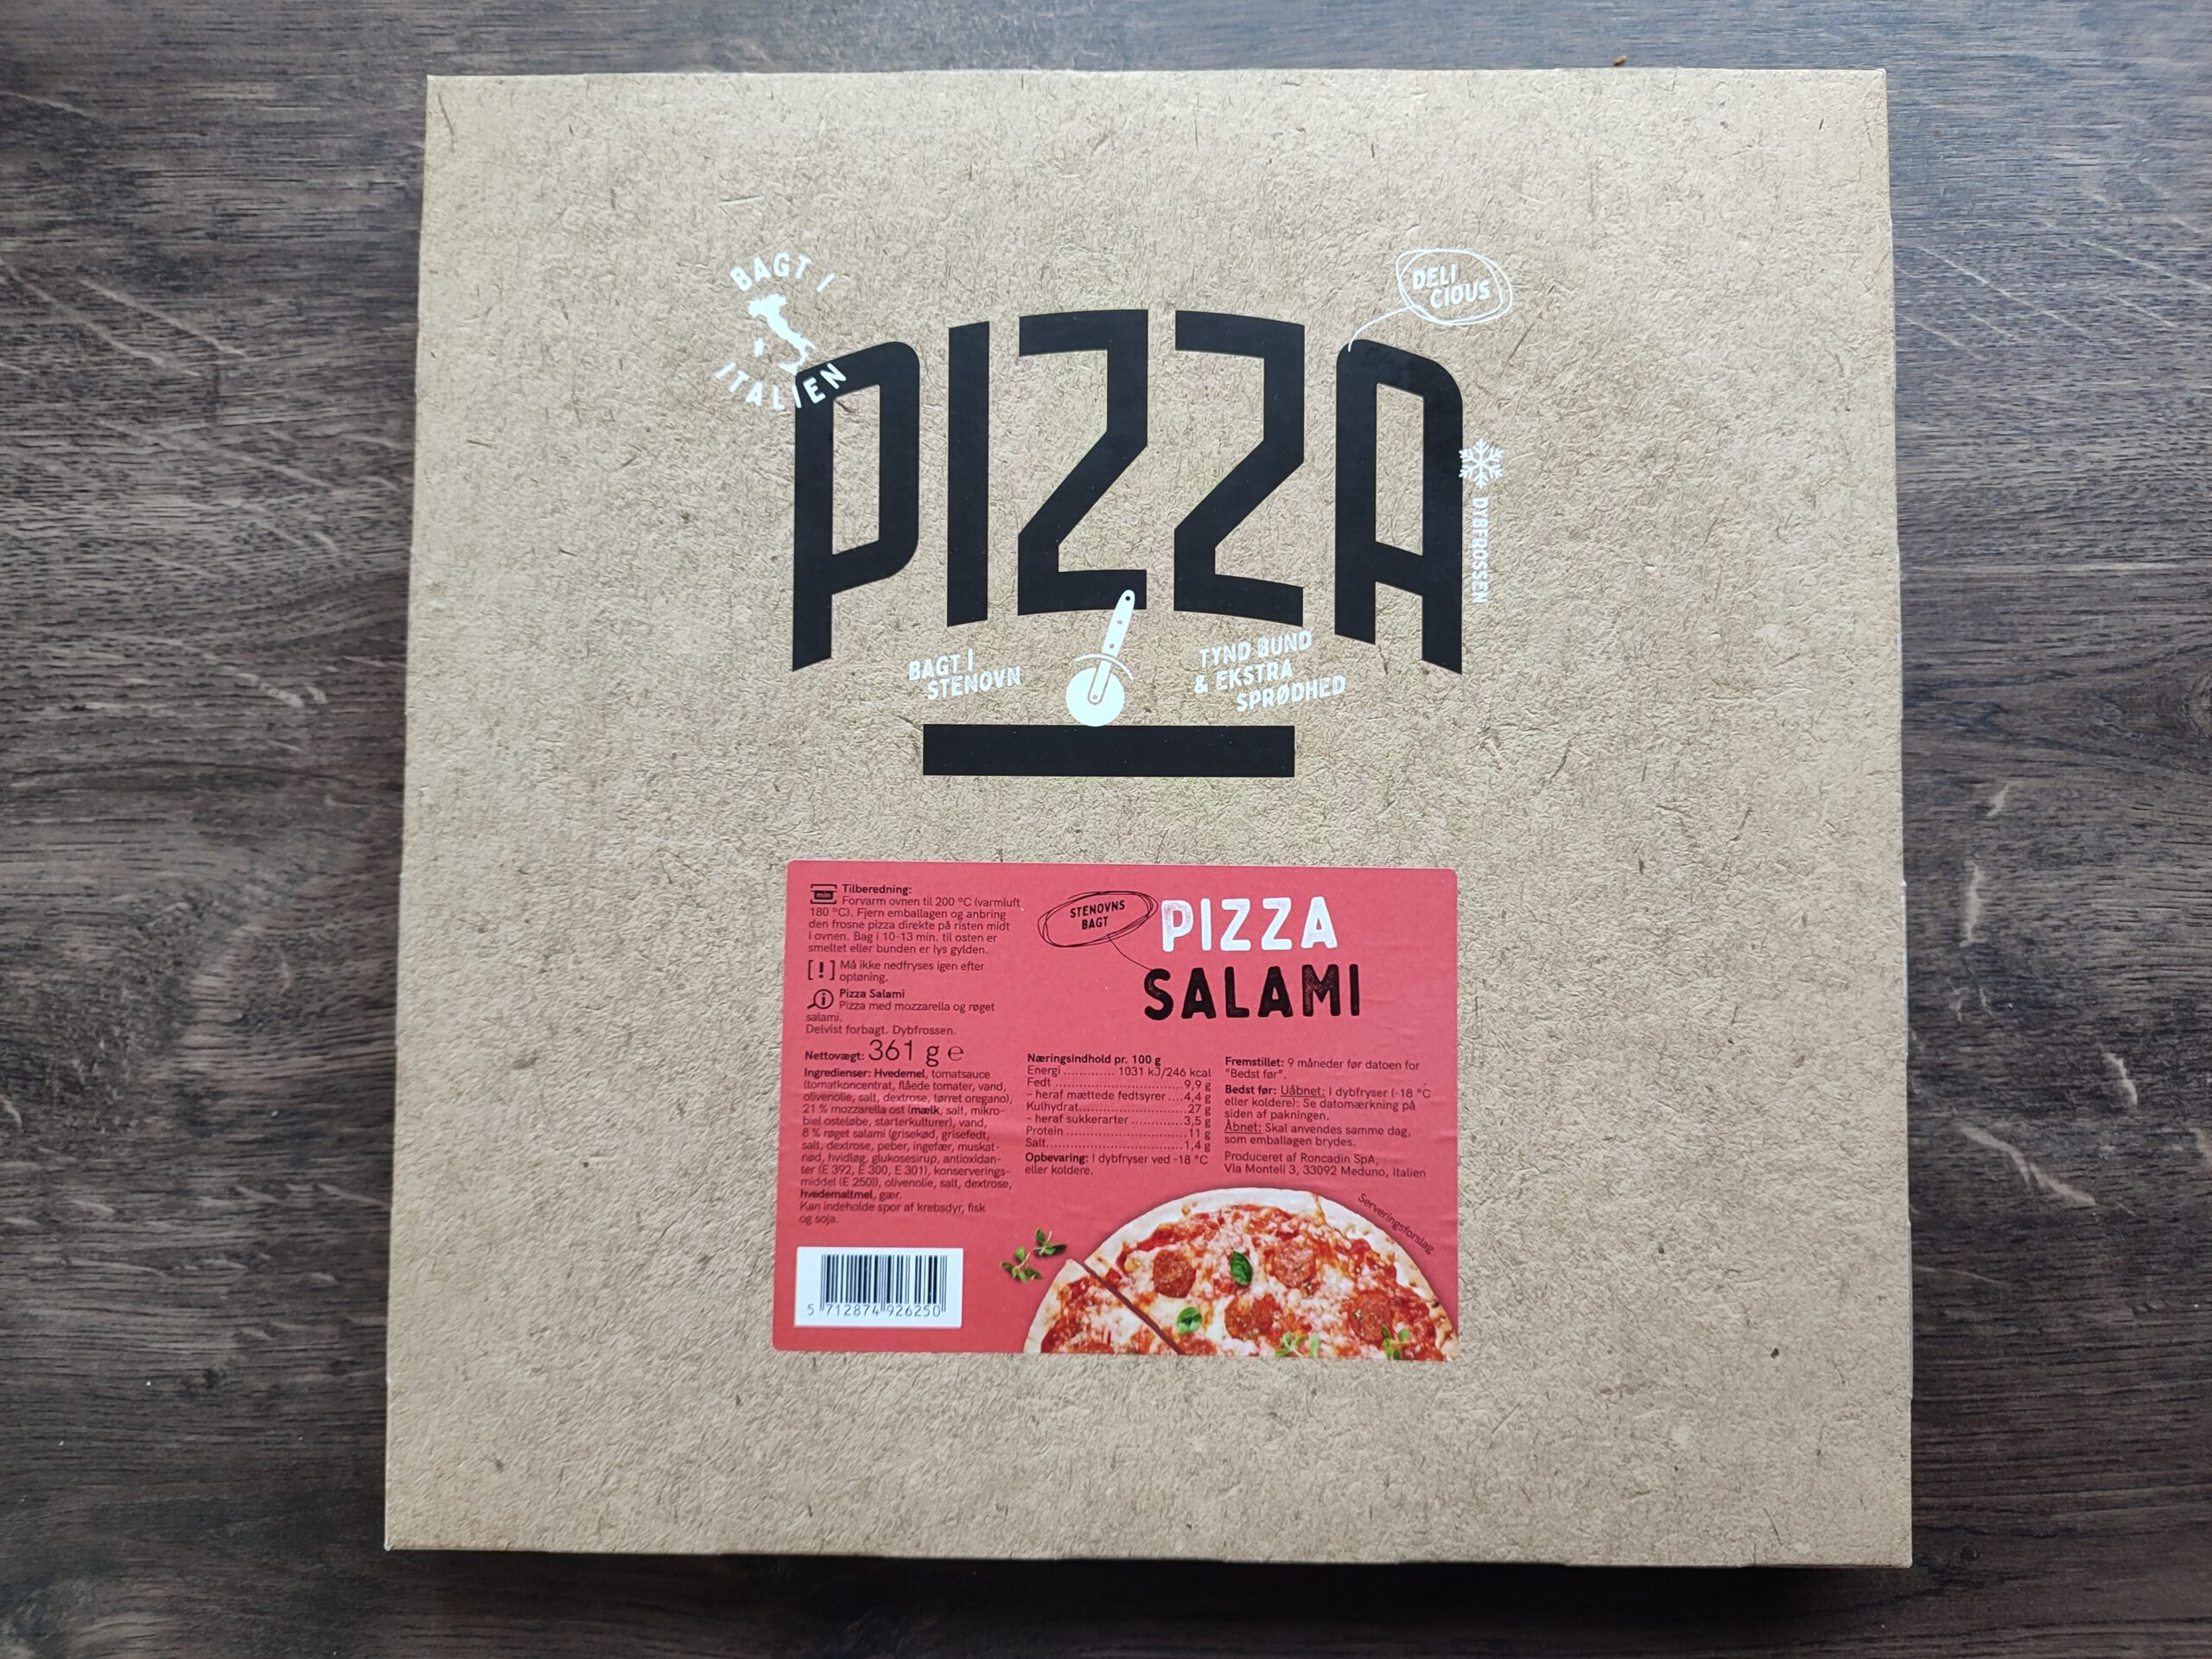 Stenovnsbagt Pizza Salami fra Netto – Bedre end sin branding